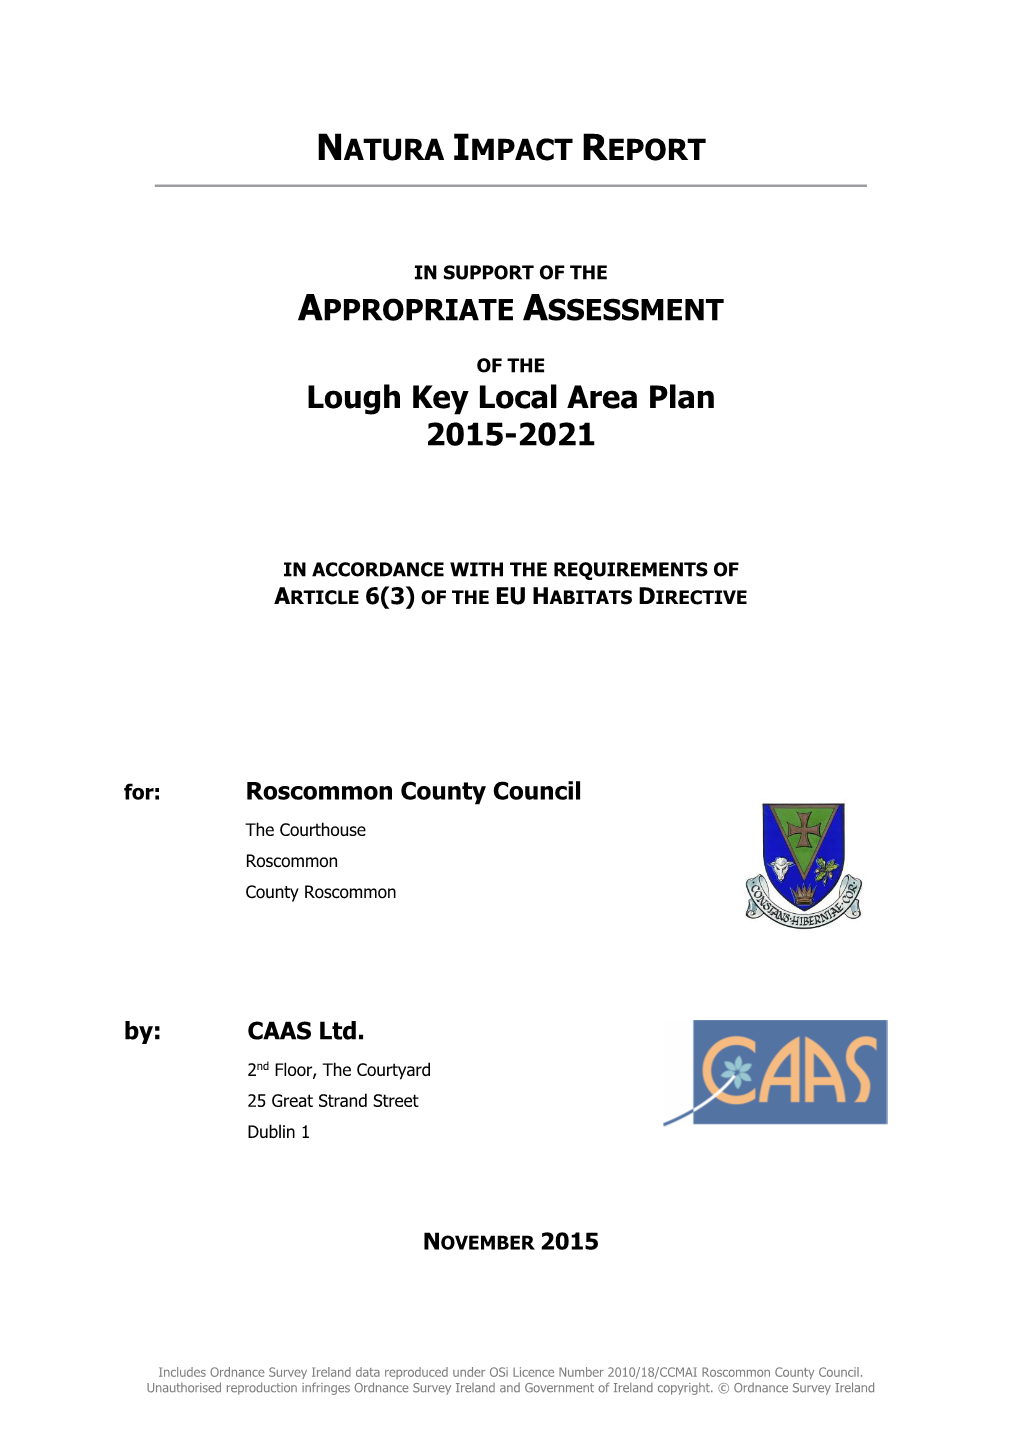 Lough Key Local Area Plan 2015-2021